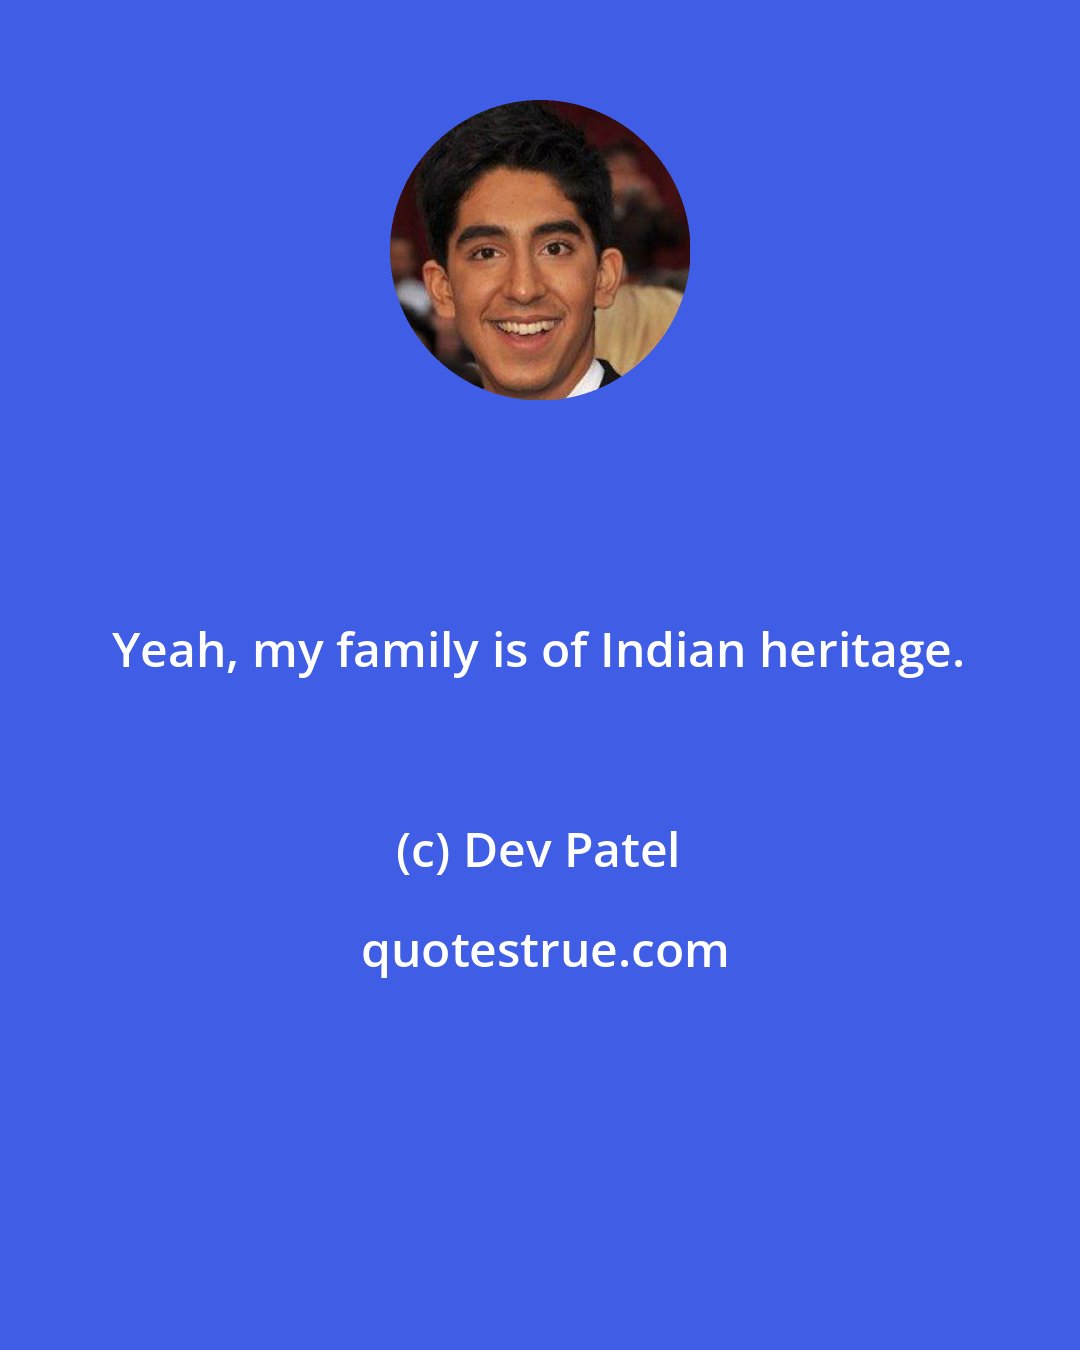 Dev Patel: Yeah, my family is of Indian heritage.